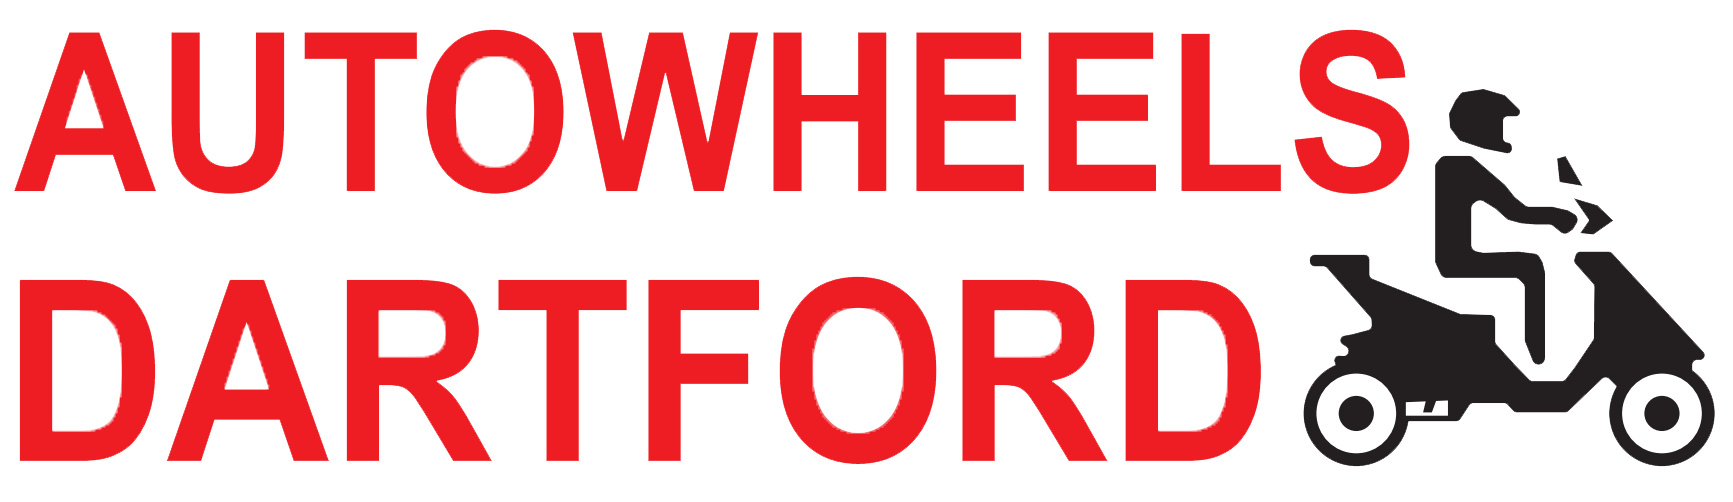 Auto wheels